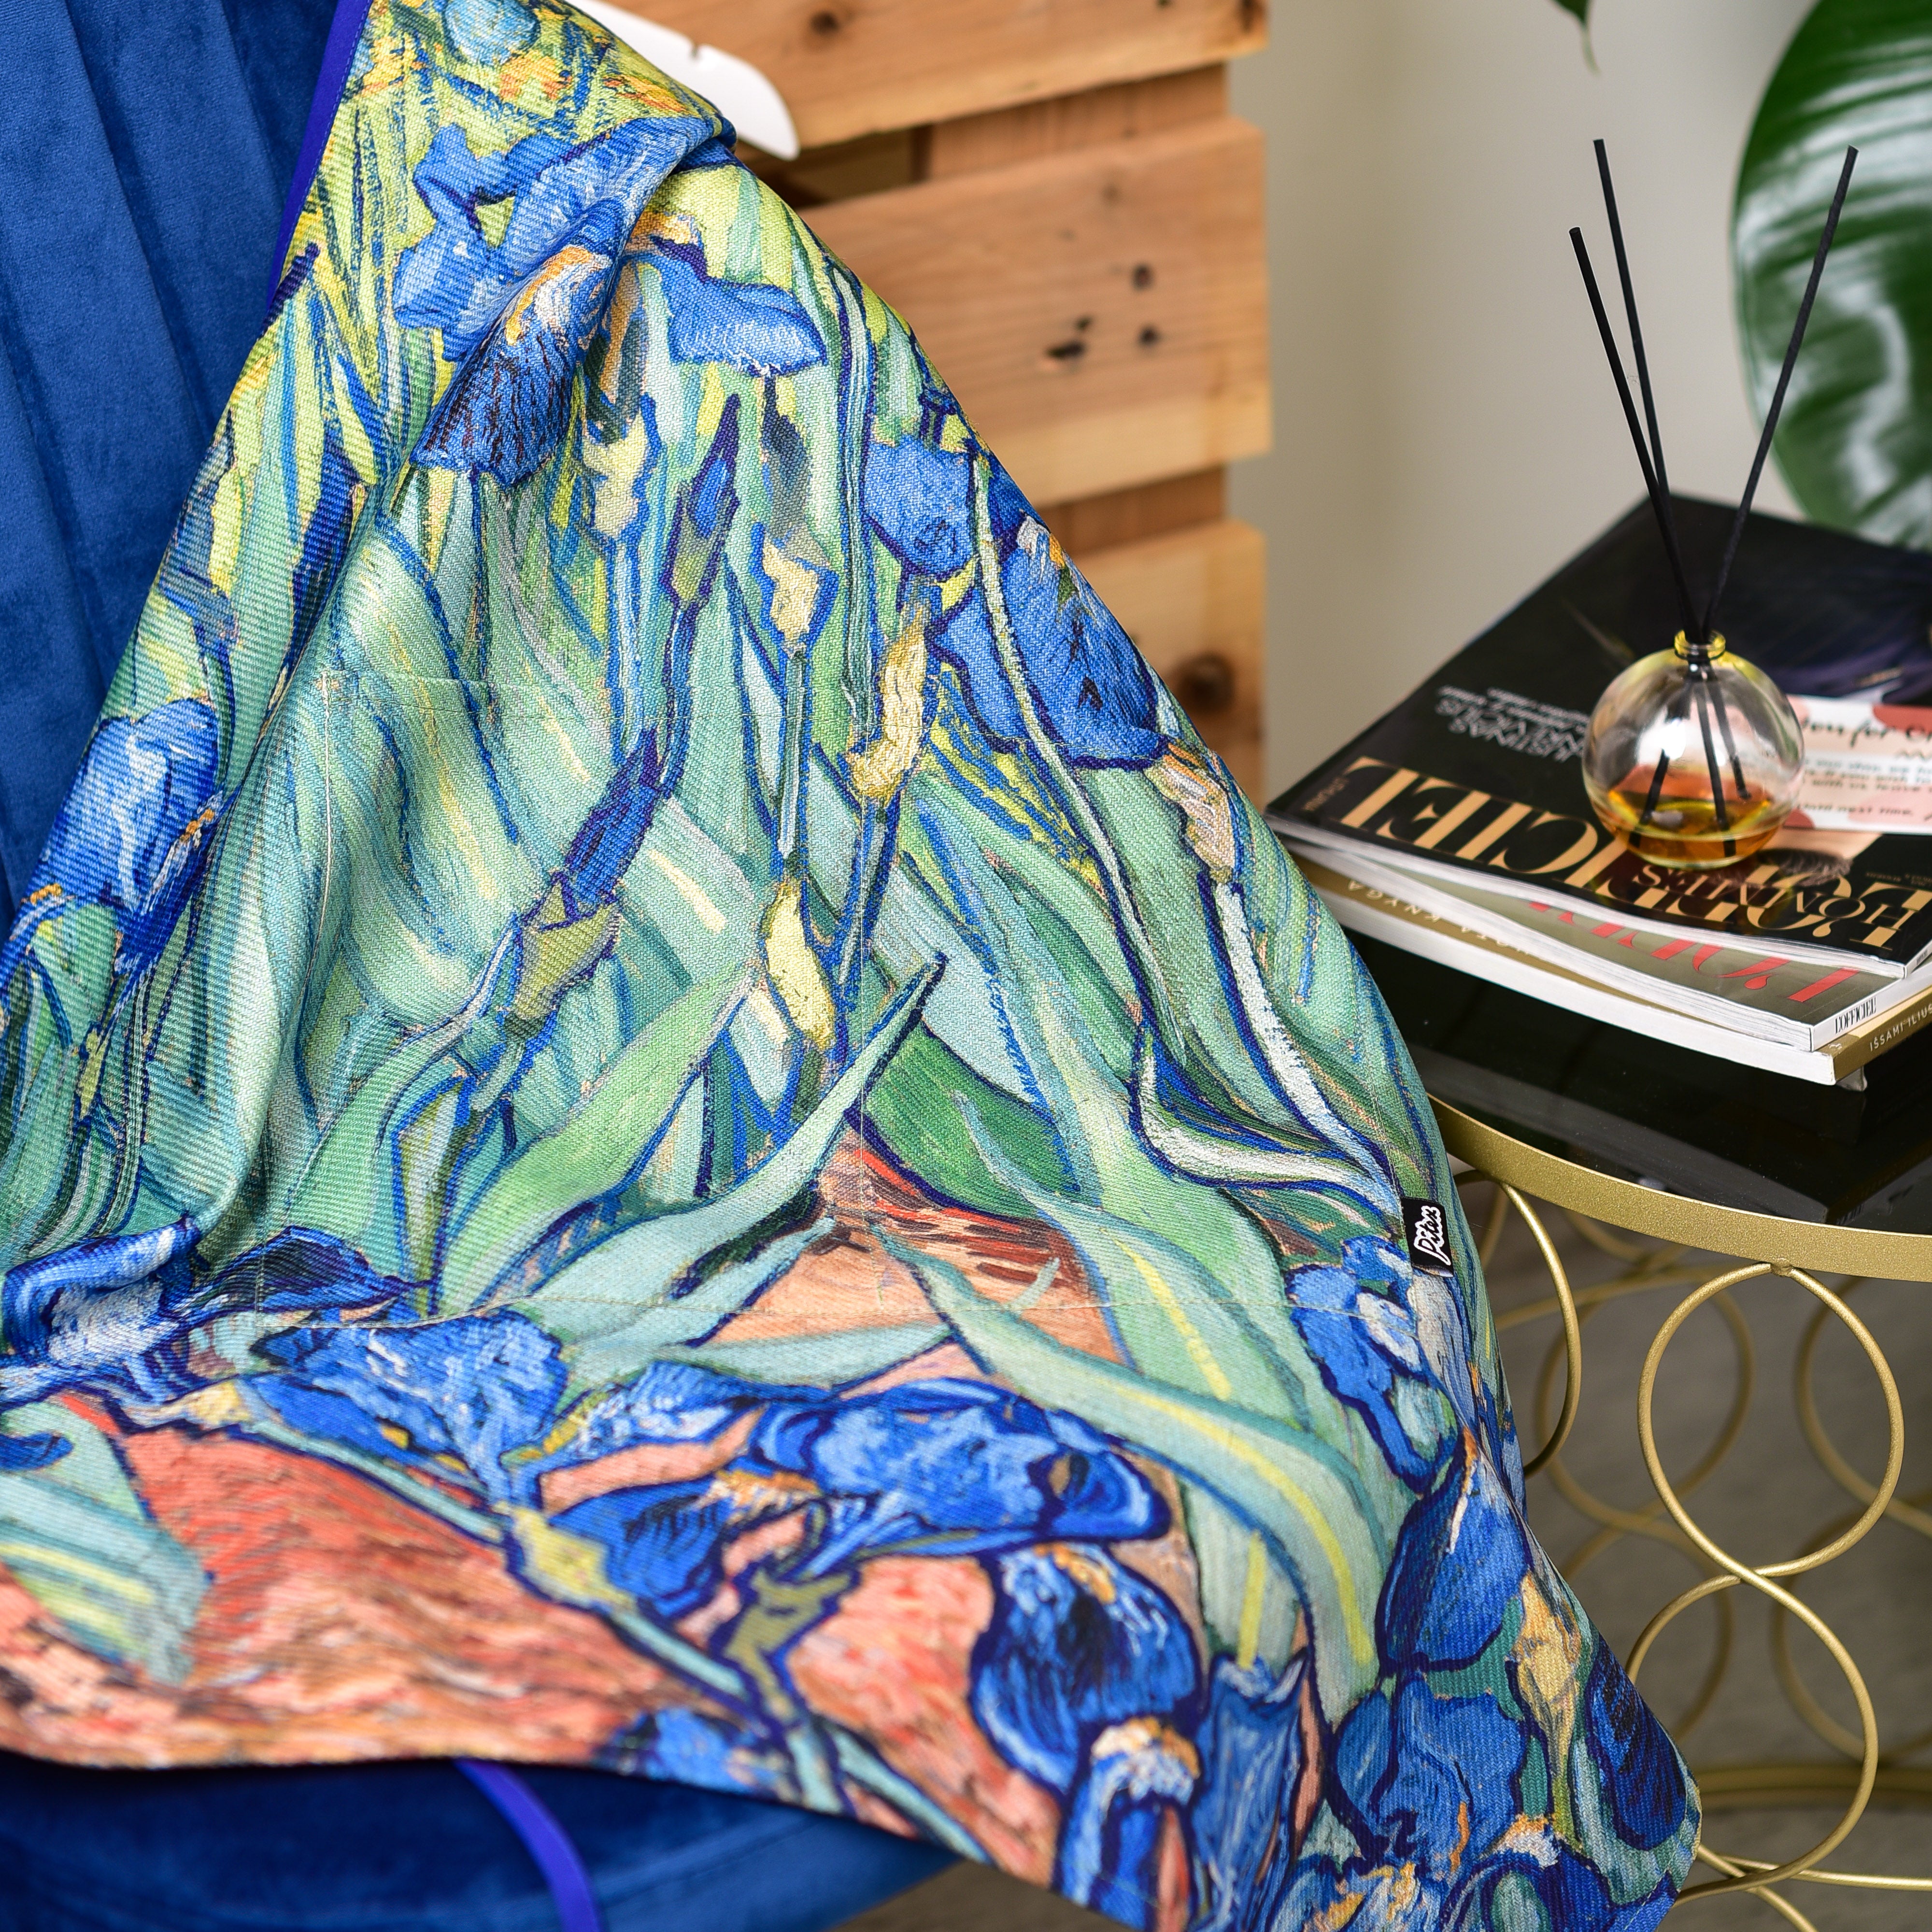 Recycled Fabric Apron Vincent van Gogh "Irises"